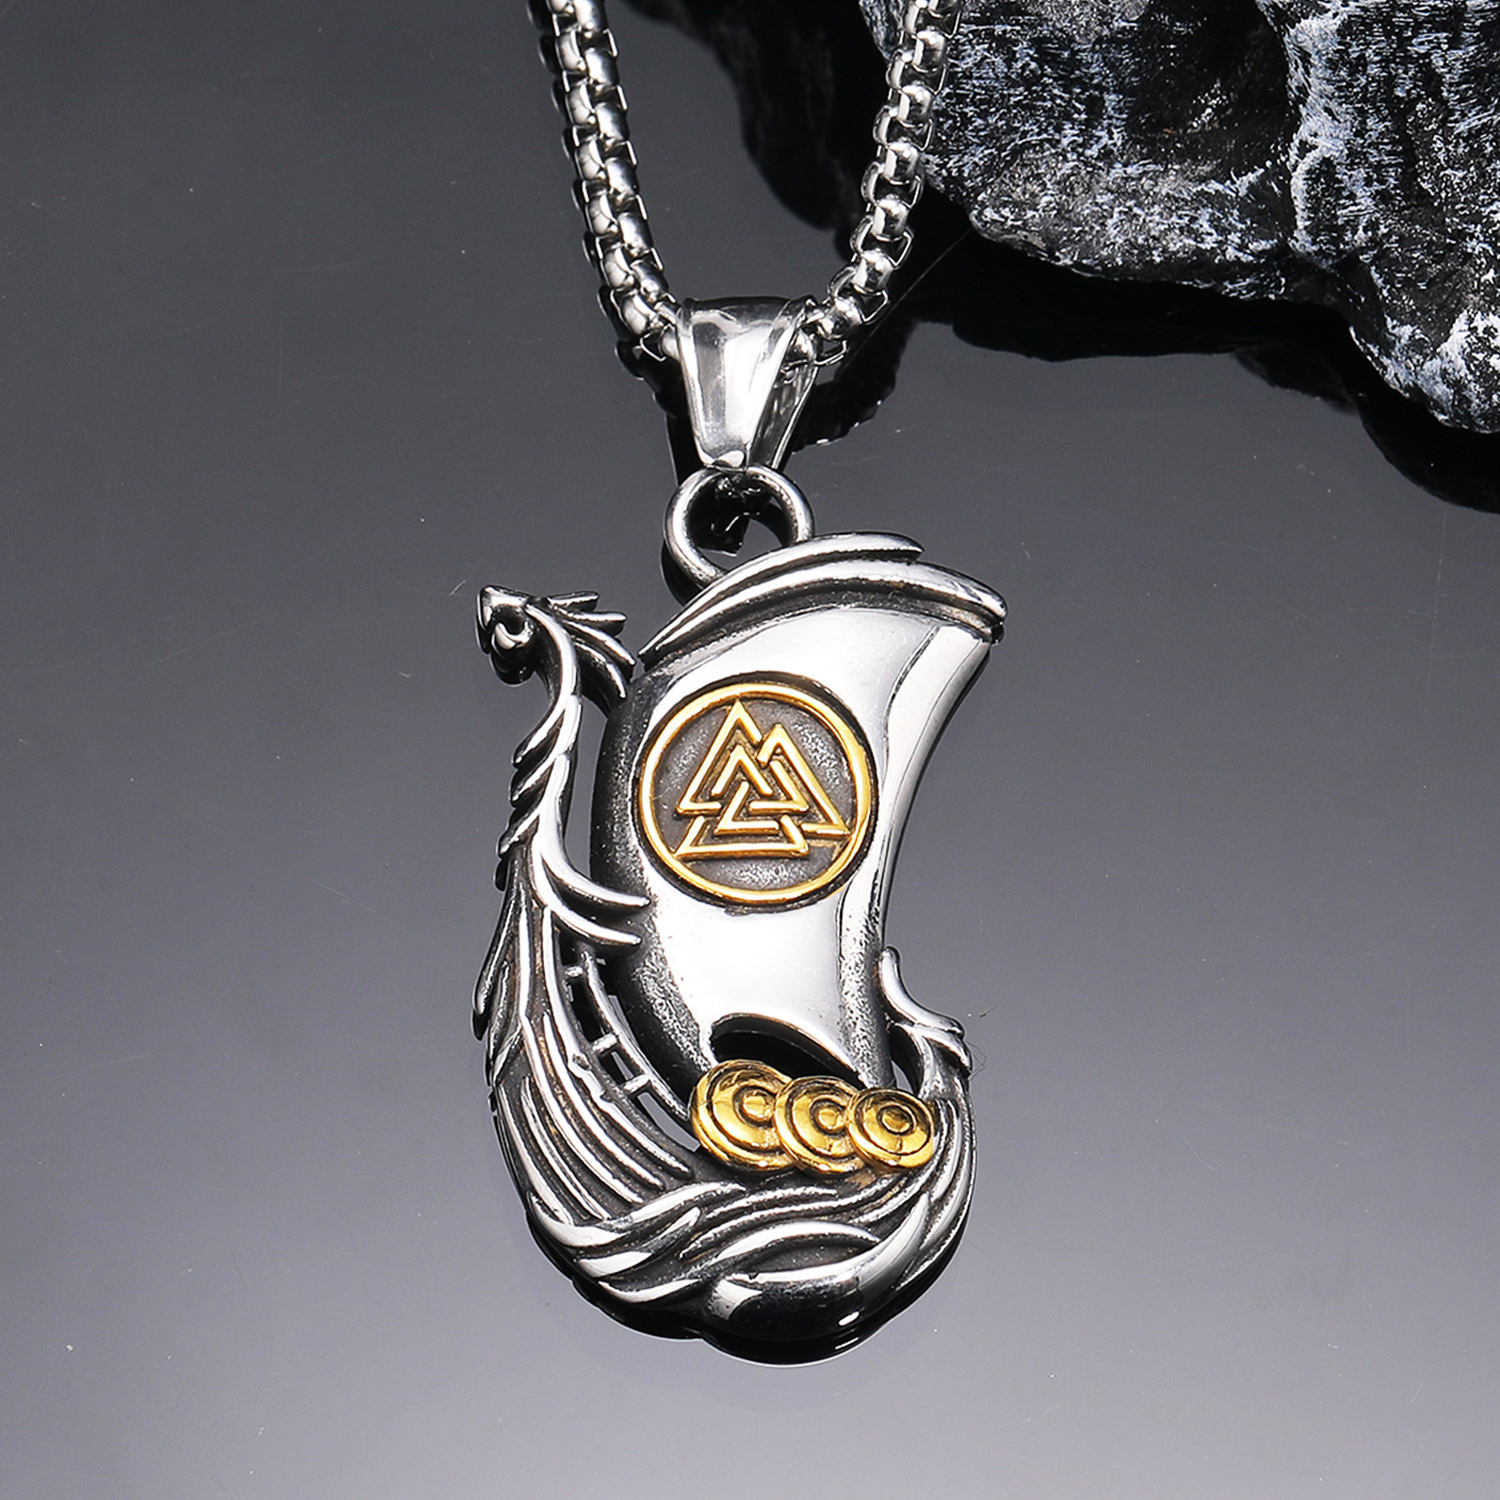 1:A gold pendant